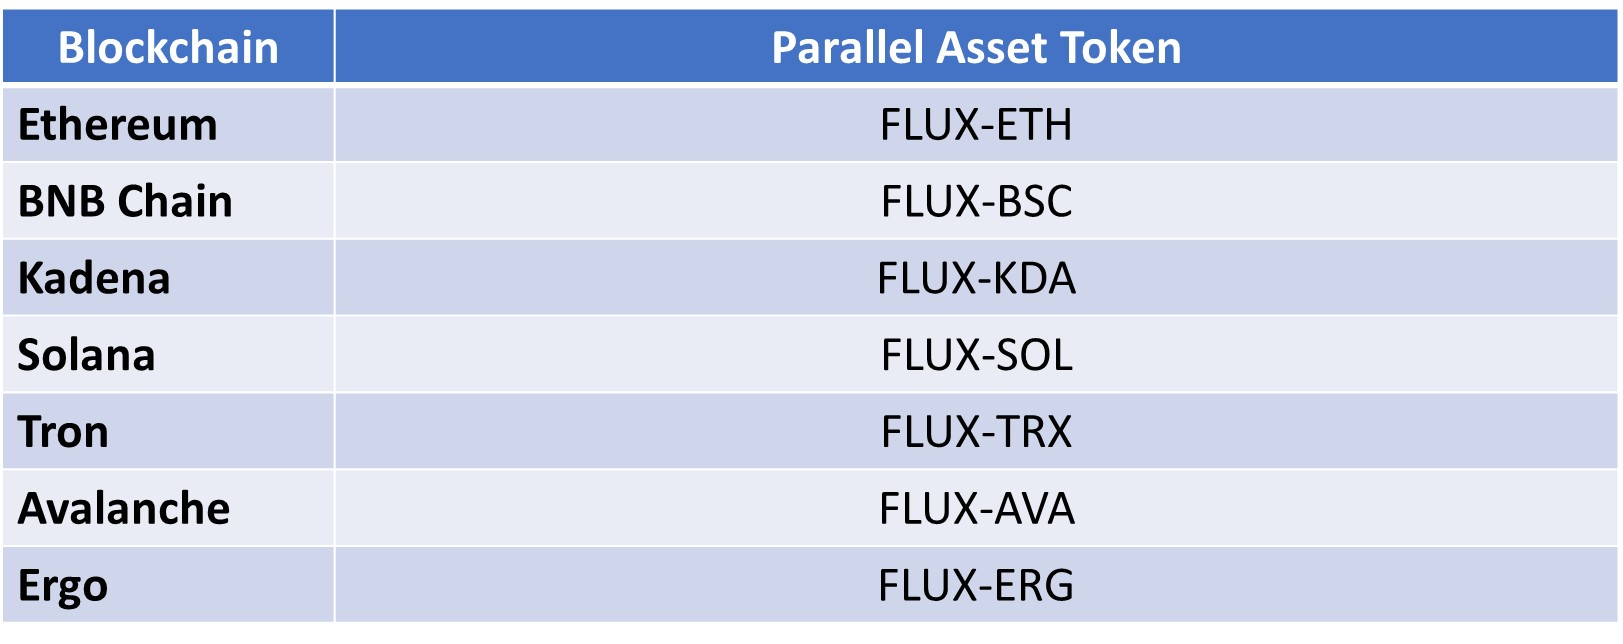 Flux Parallel Asset Token Tickers and Blockchains